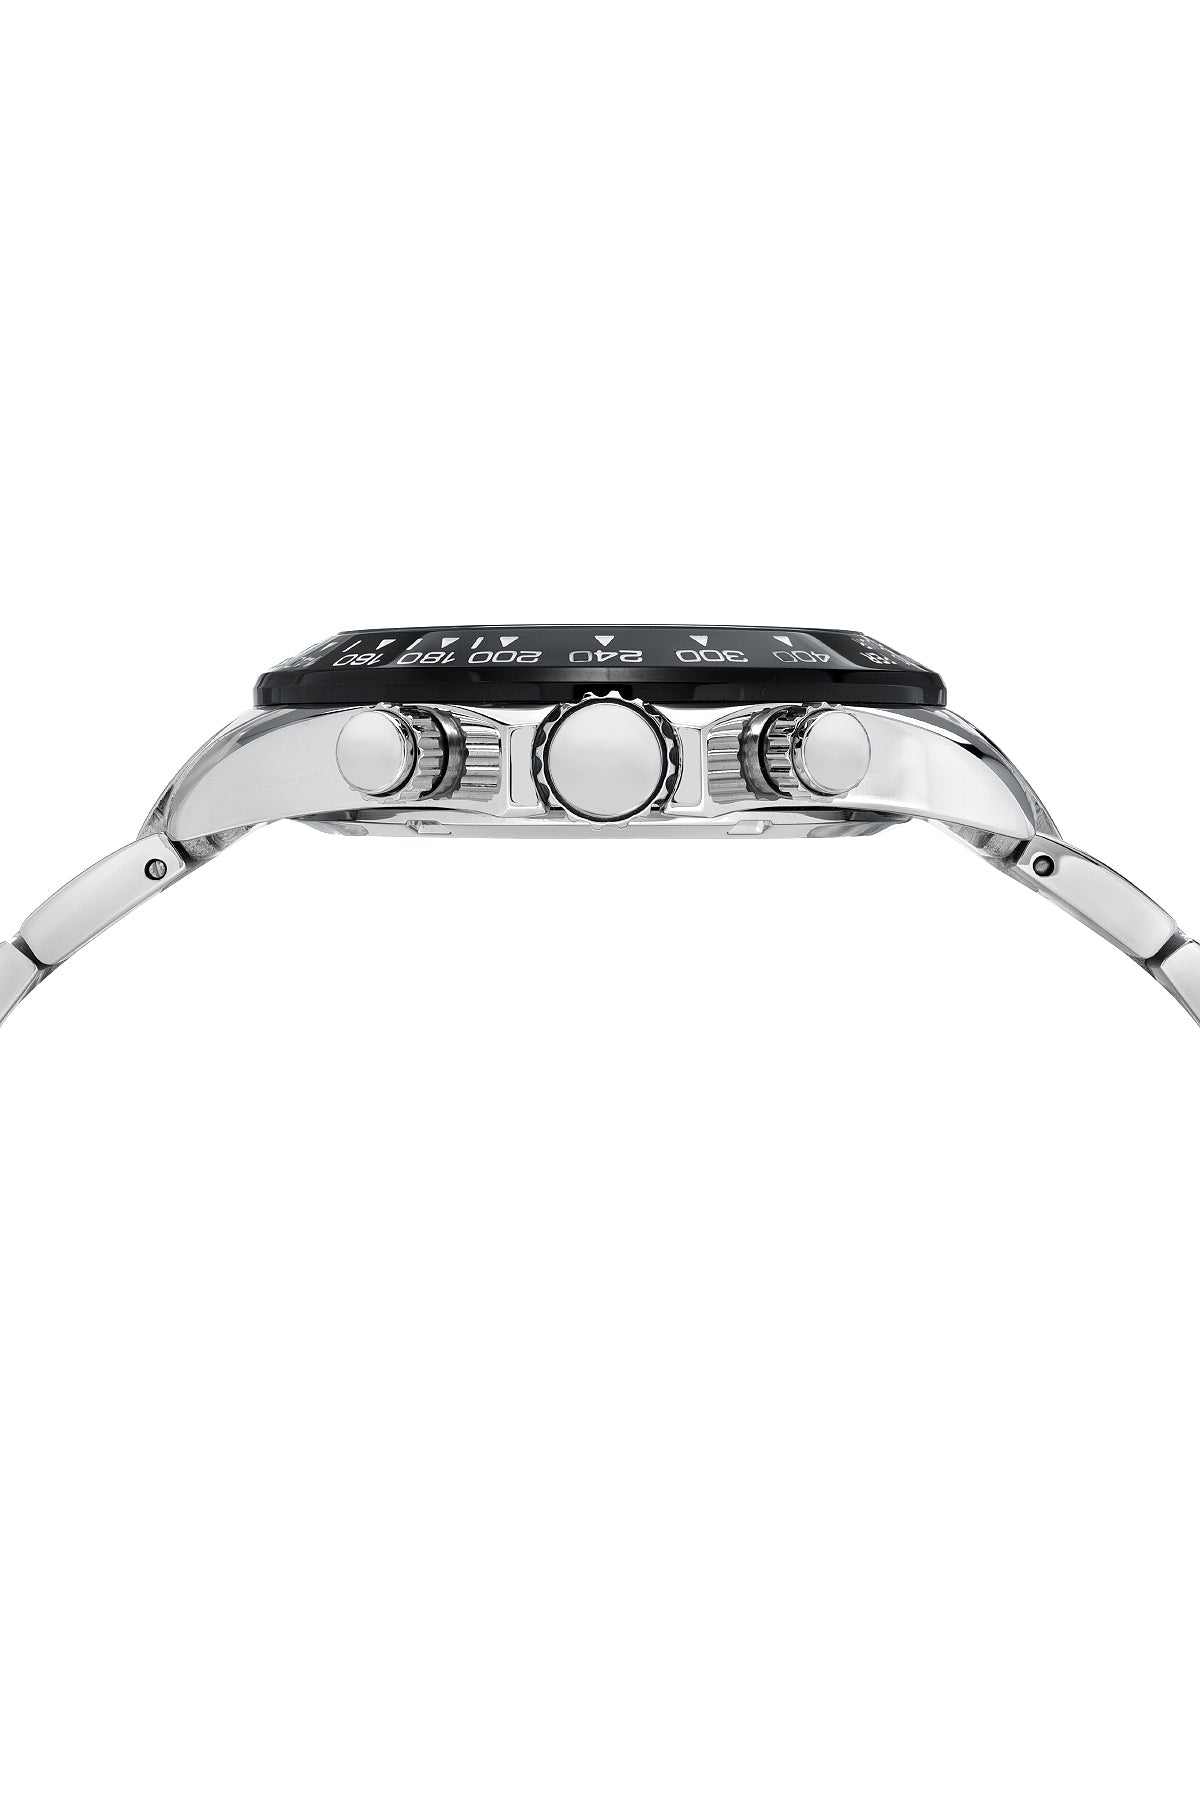 Porsamo Bleu Preston Luxury Multifunction Men's Stainless Steel Watch, Silver, Black, White 1031BPRS